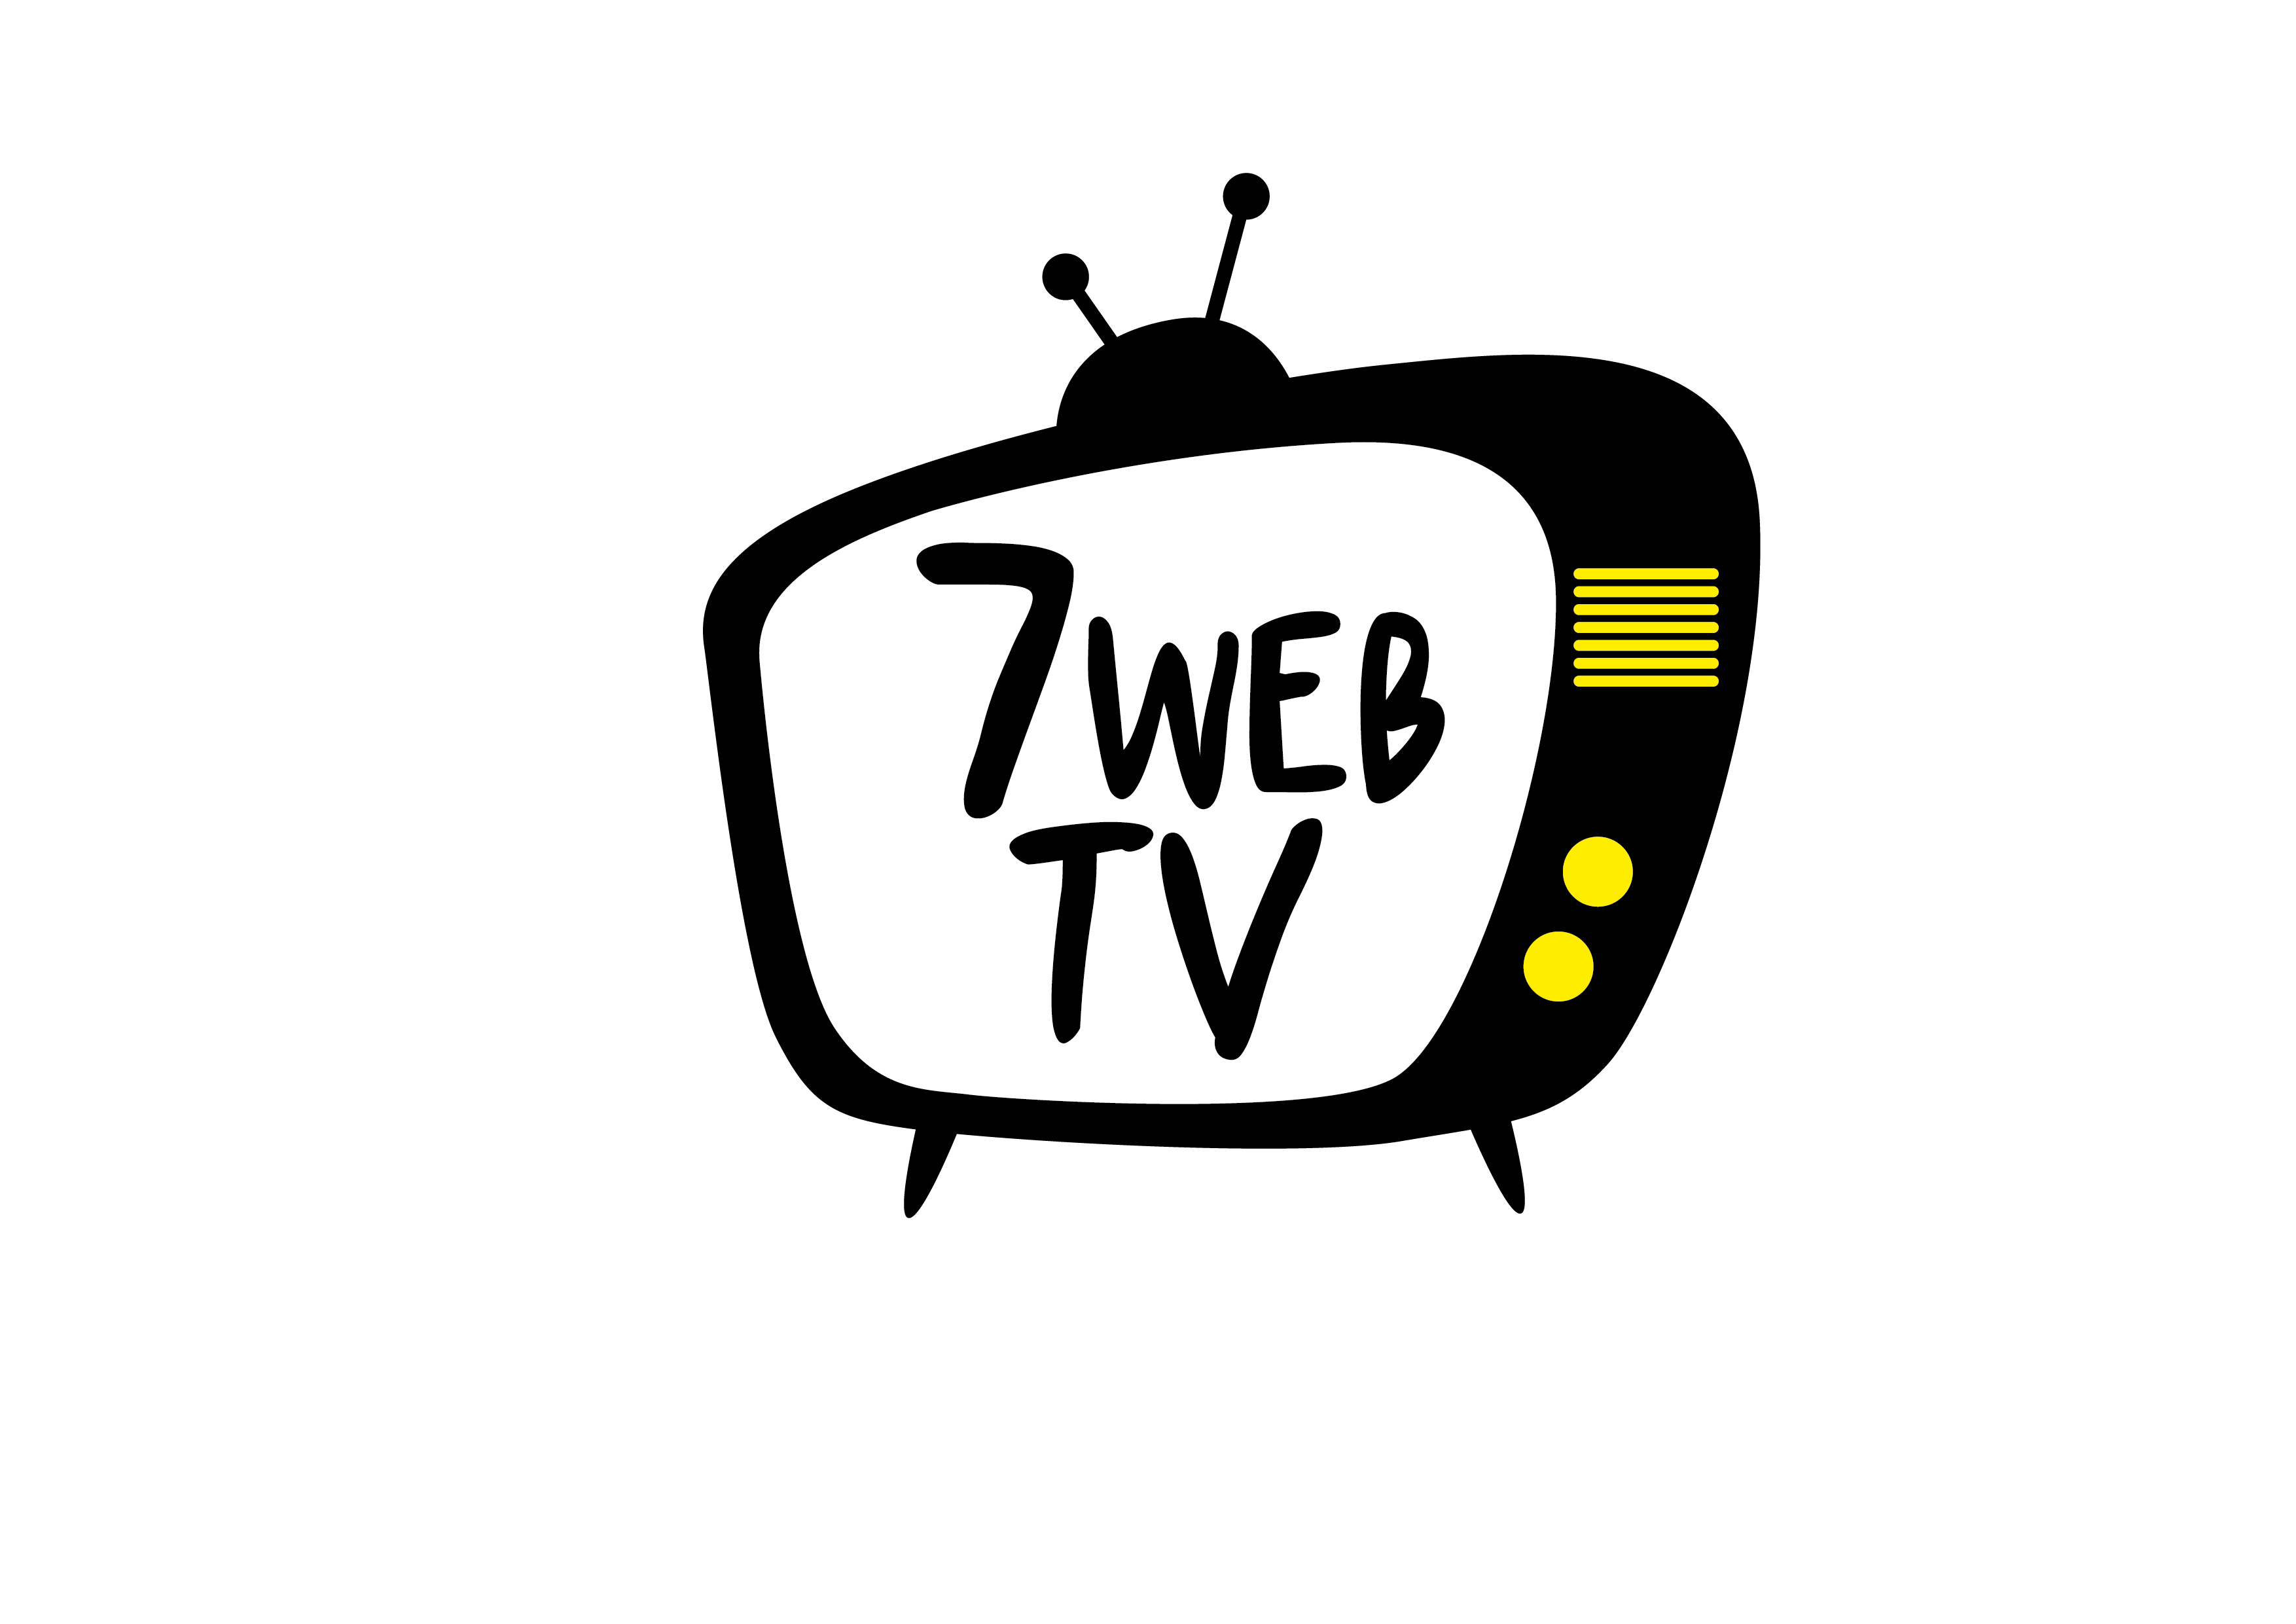 7web.tv